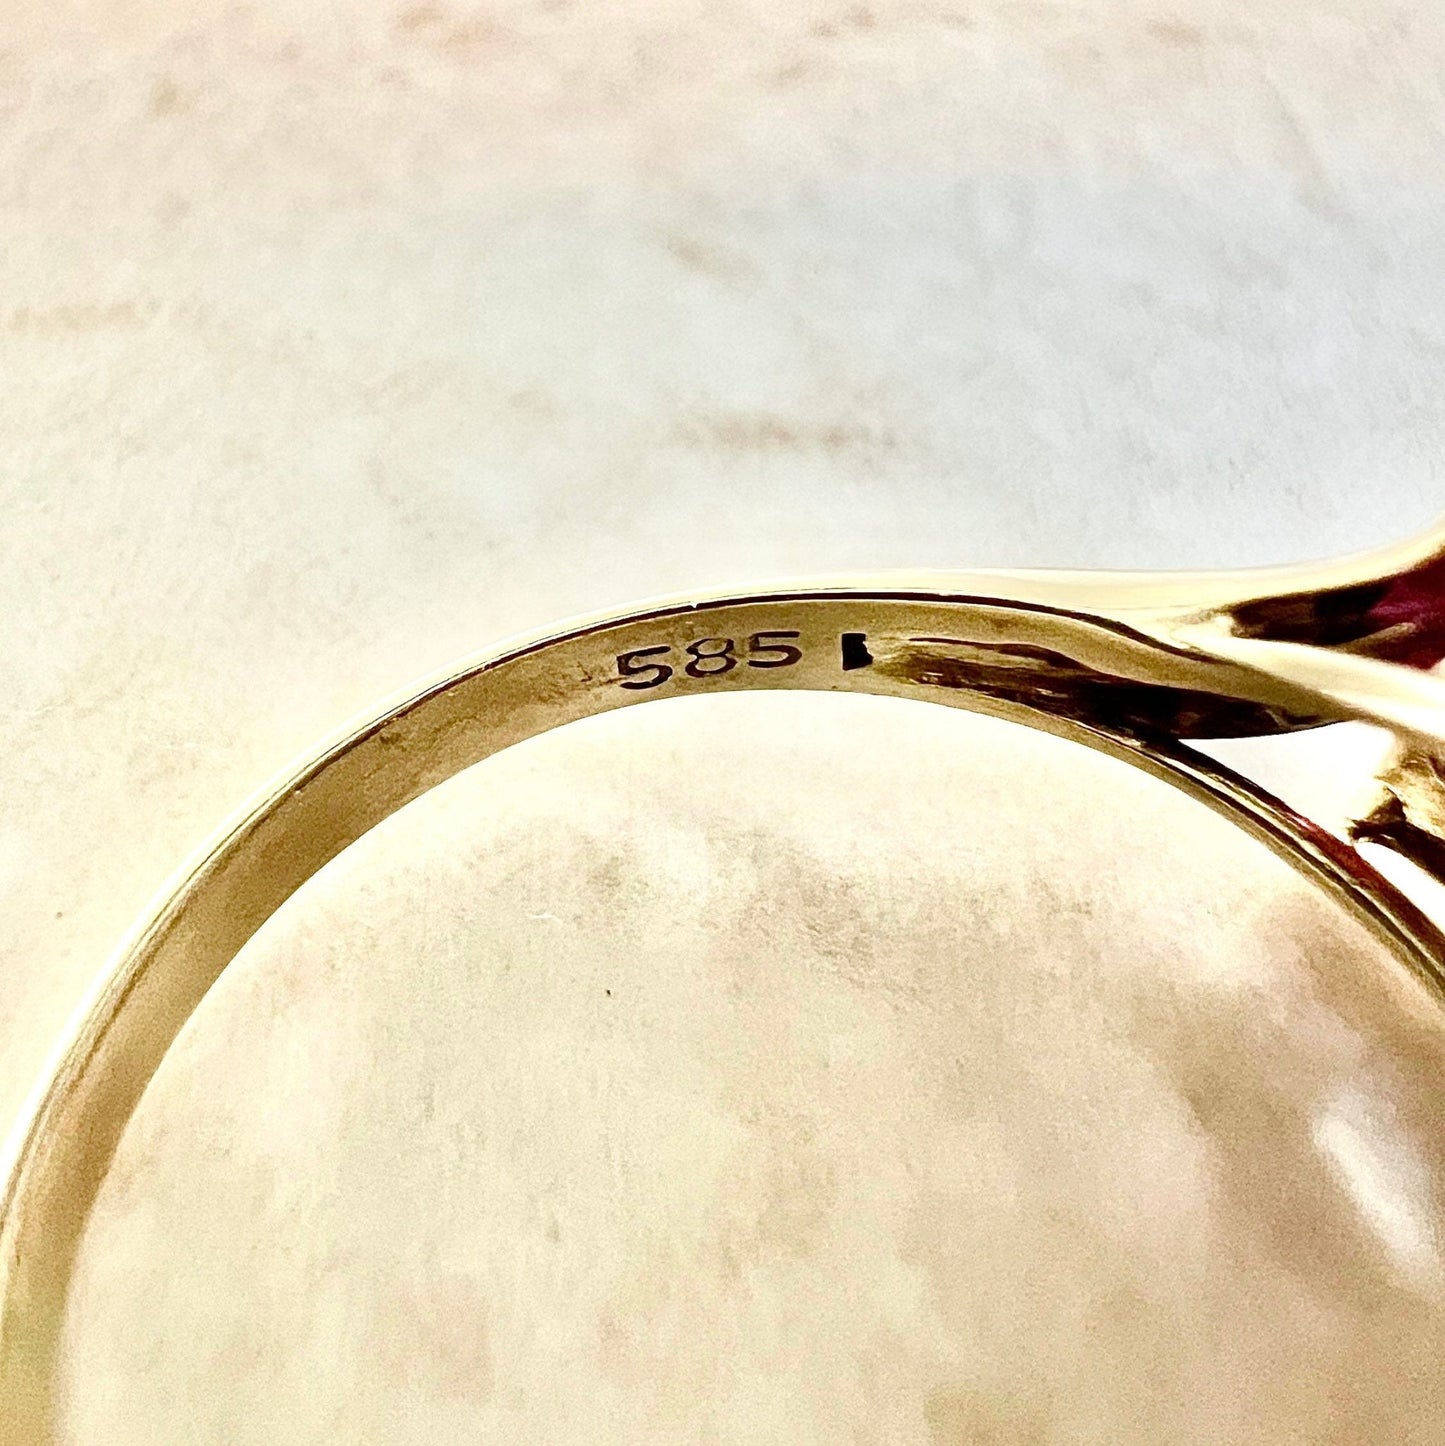 Vintage 14K Gold Ruby Cocktail Ring - 14 Karat Yellow Gold Ruby Ring - Ruby & Diamond Ring - July Birthstone Ring - 14K Gold Ring -Best Gift